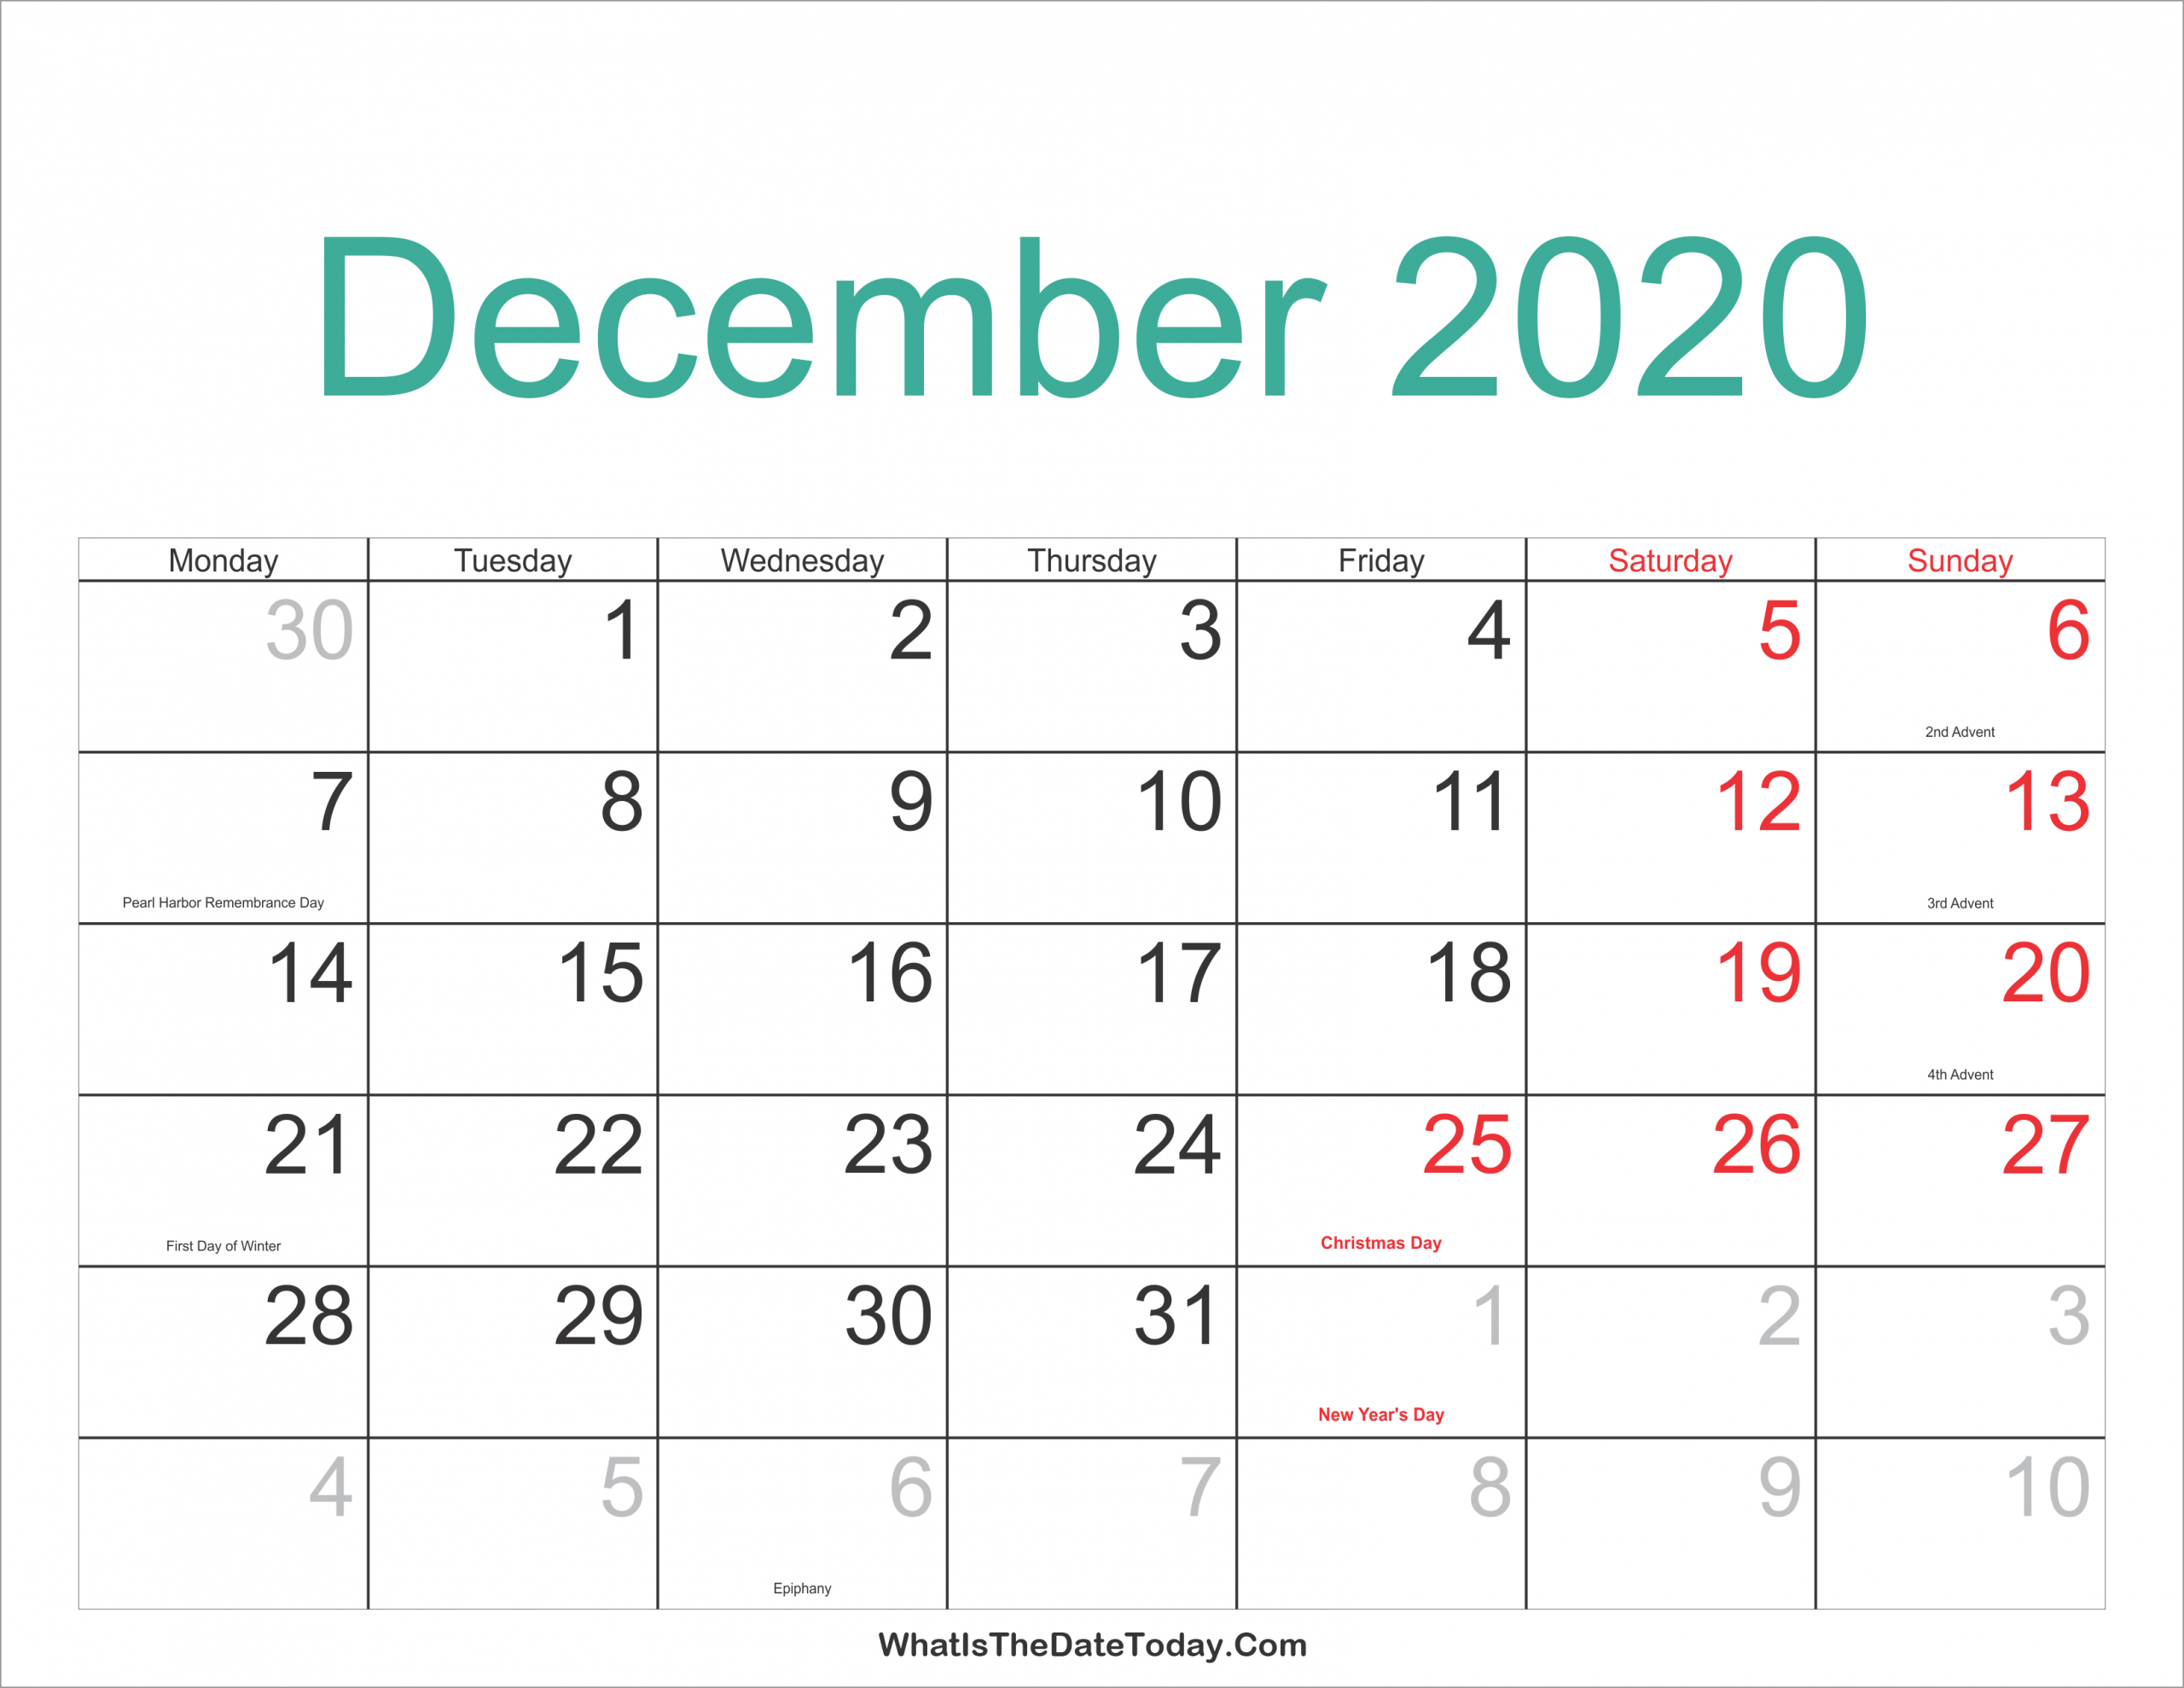 December 2020 Calendar Printable With Holidays | Whatisthedatetoday December 2020 To Feb 2021 Calendar